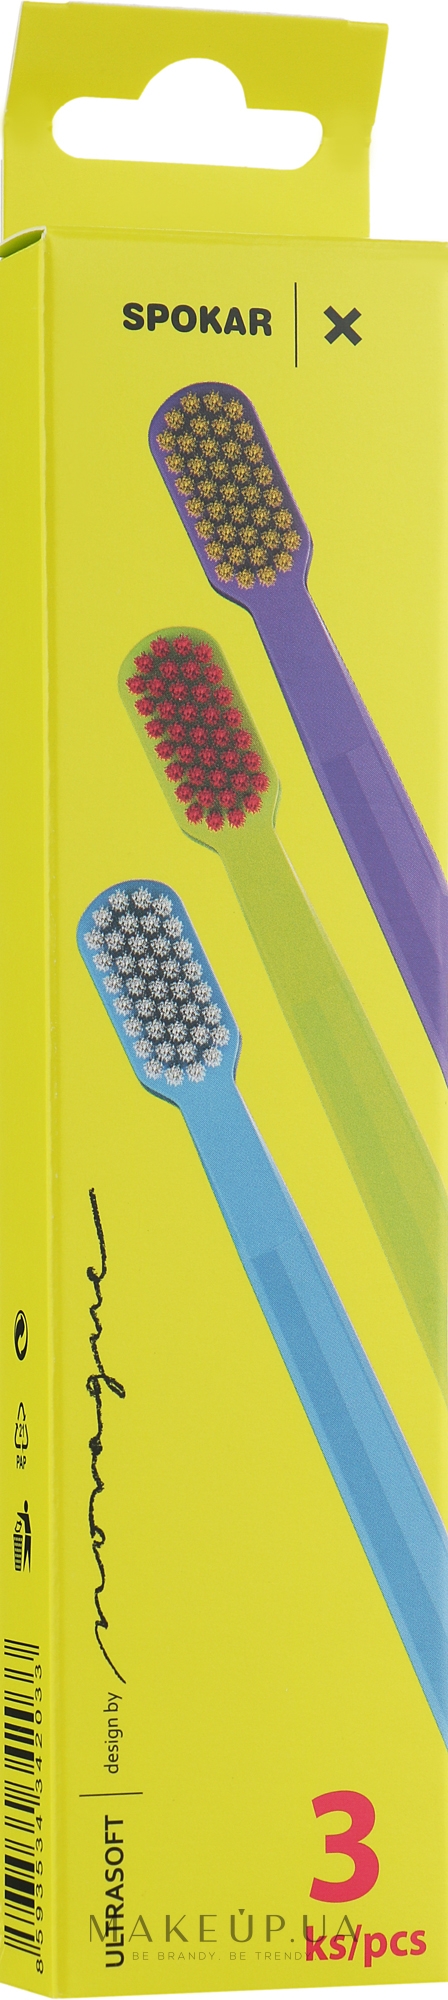 Набор зубных щеток "X", ультрамягких, фиолетово-желтая + салатово-розовая + сине-белая - Spokar X — фото 3шт